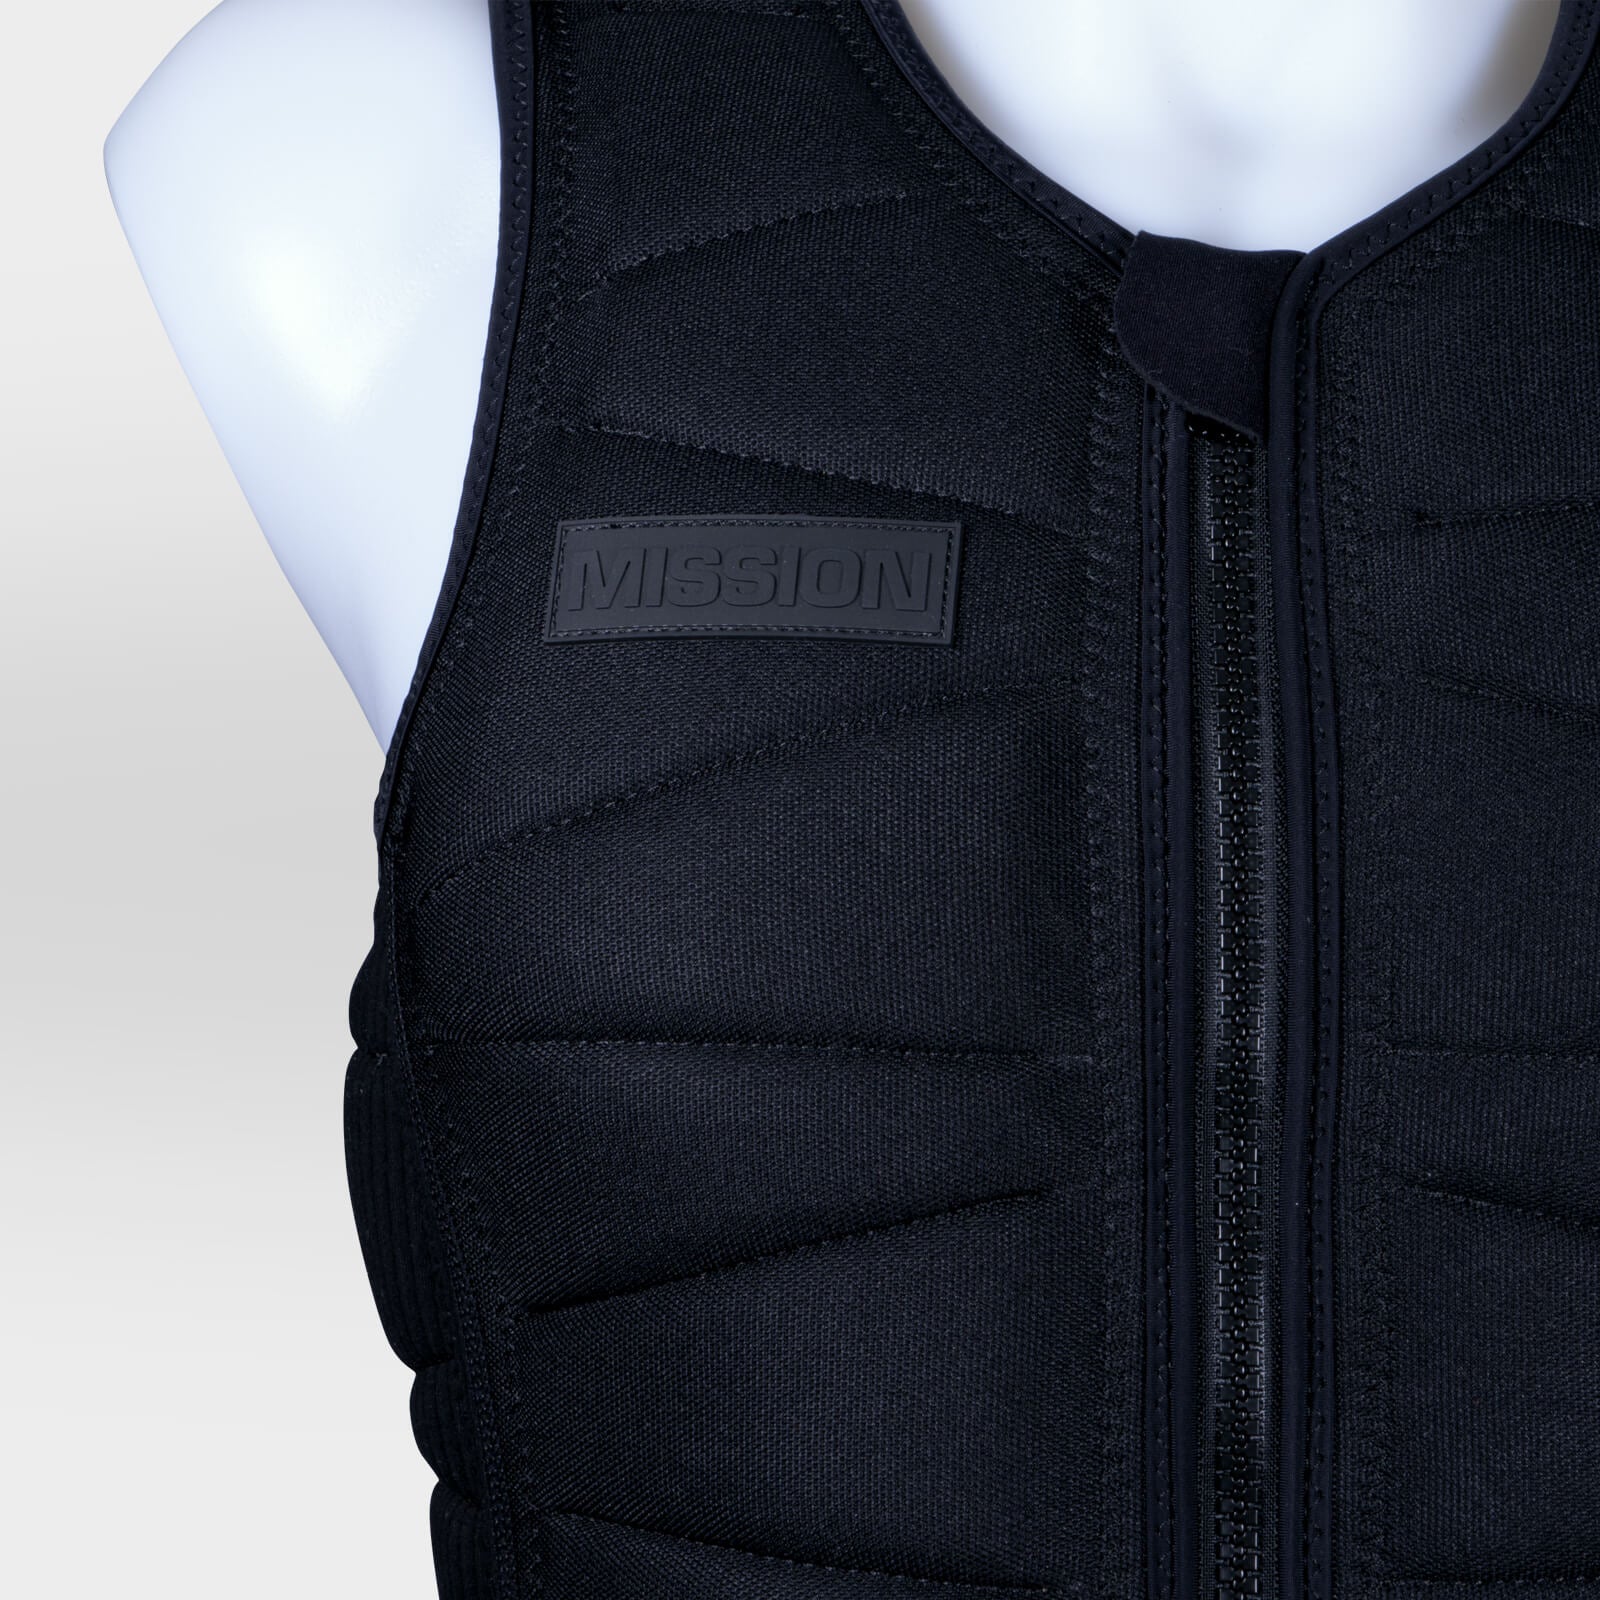 ONDO Comp vest close up of side